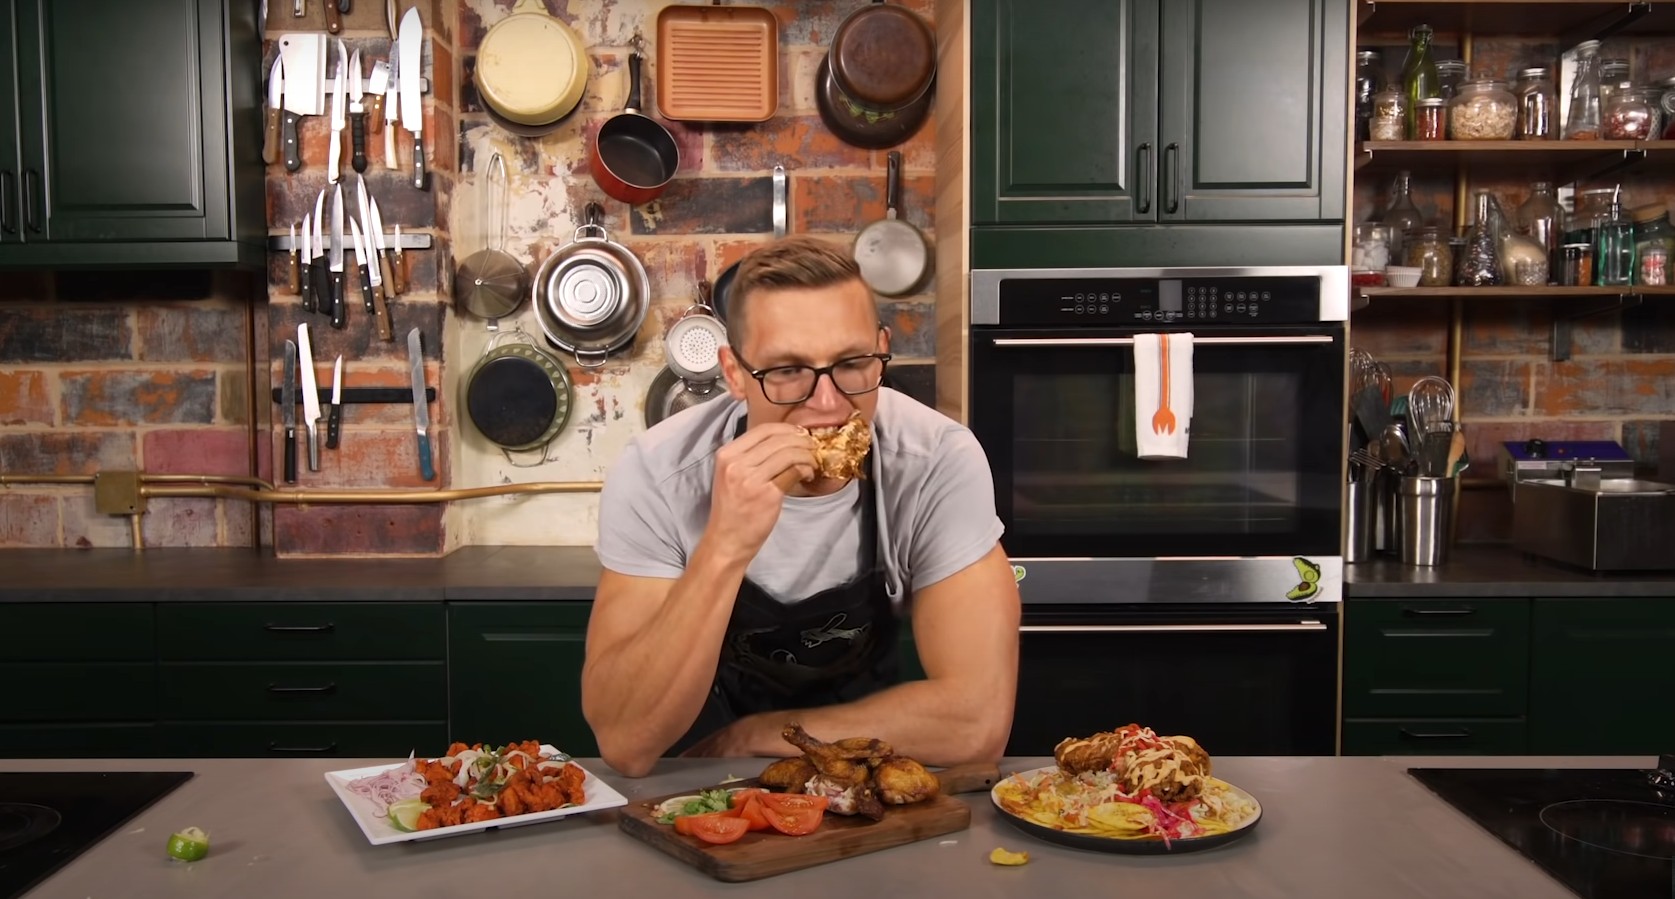 Canal de YouTube Mythical Kitchen destaca el pollo chuco como el mejor